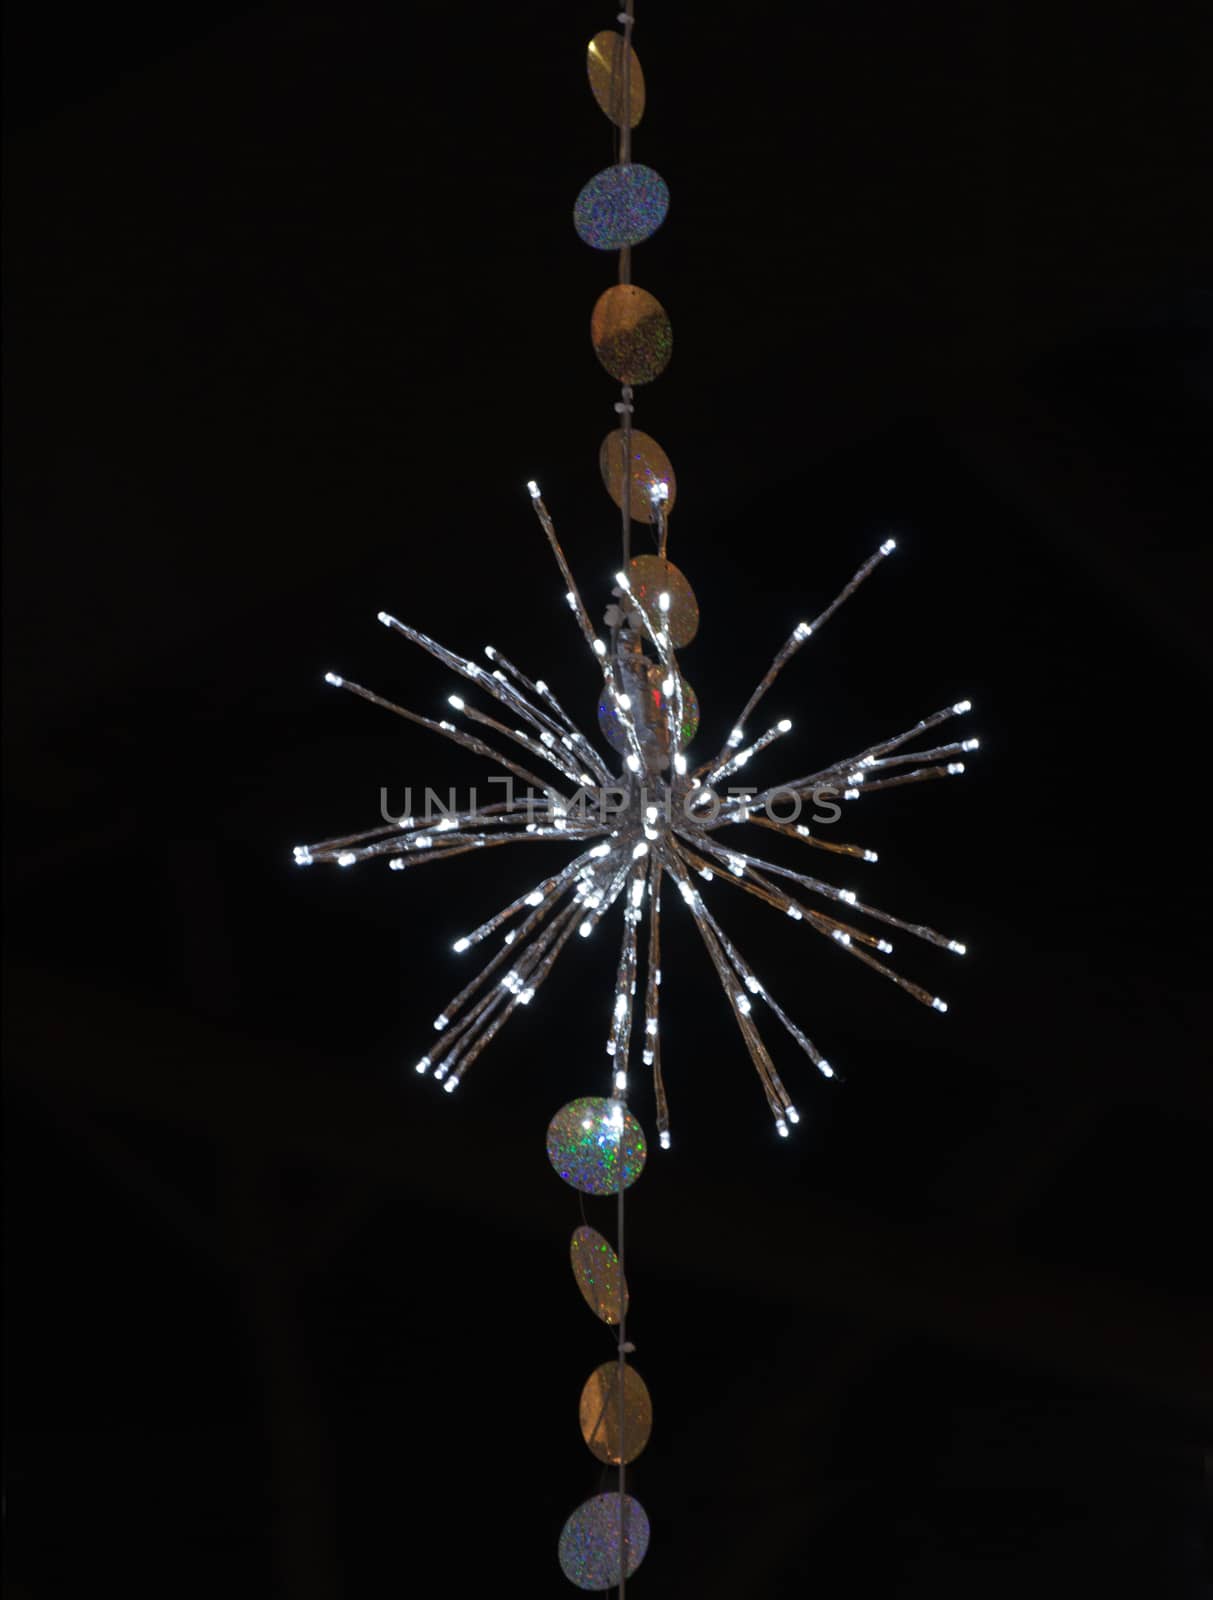 Illuminated Christmas Star by TimAwe